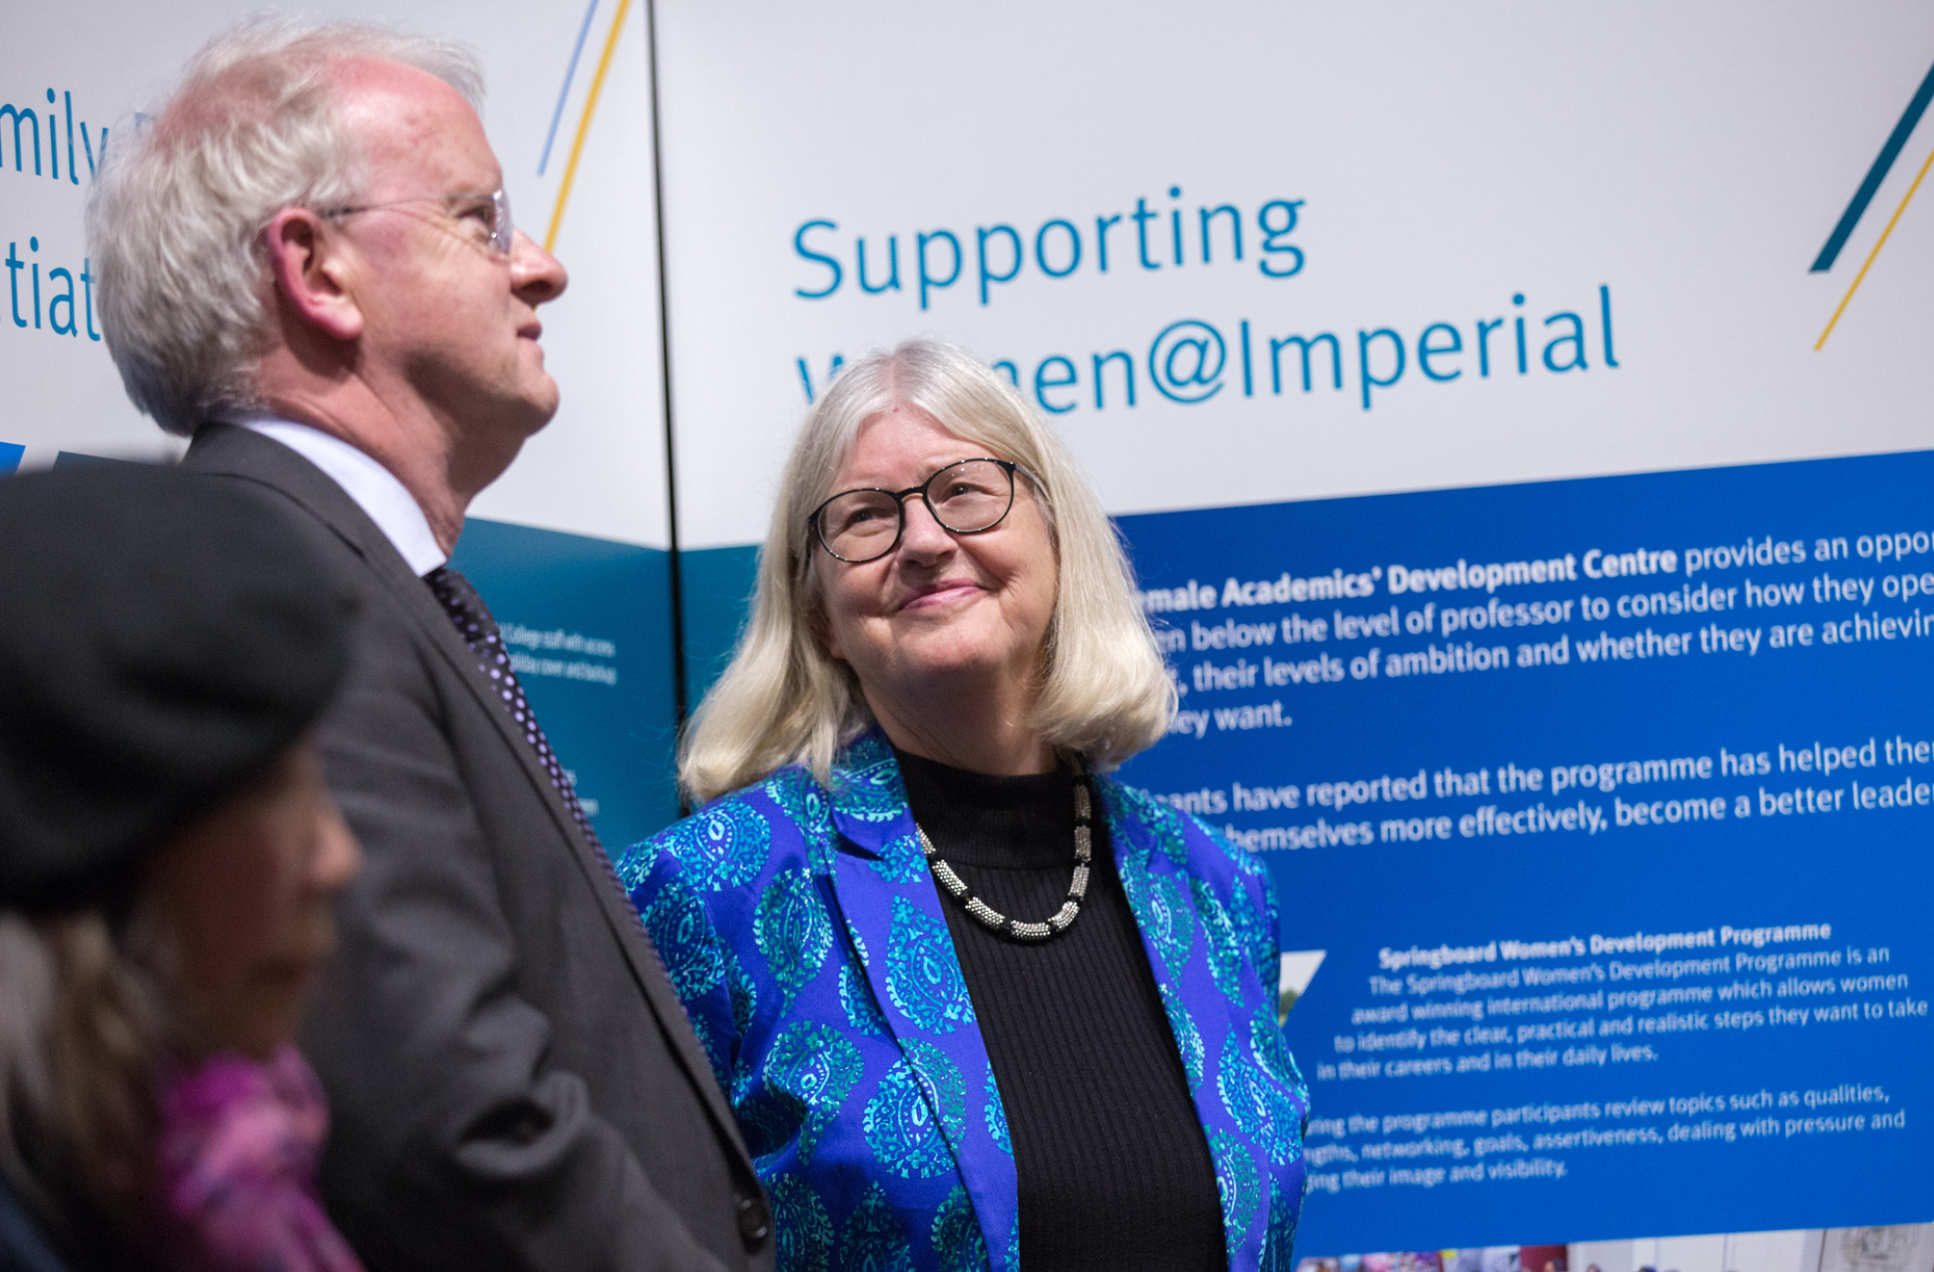 Professor Stirling with Professor Dot Griffiths, the Provost’s Envoy for Gender Equality